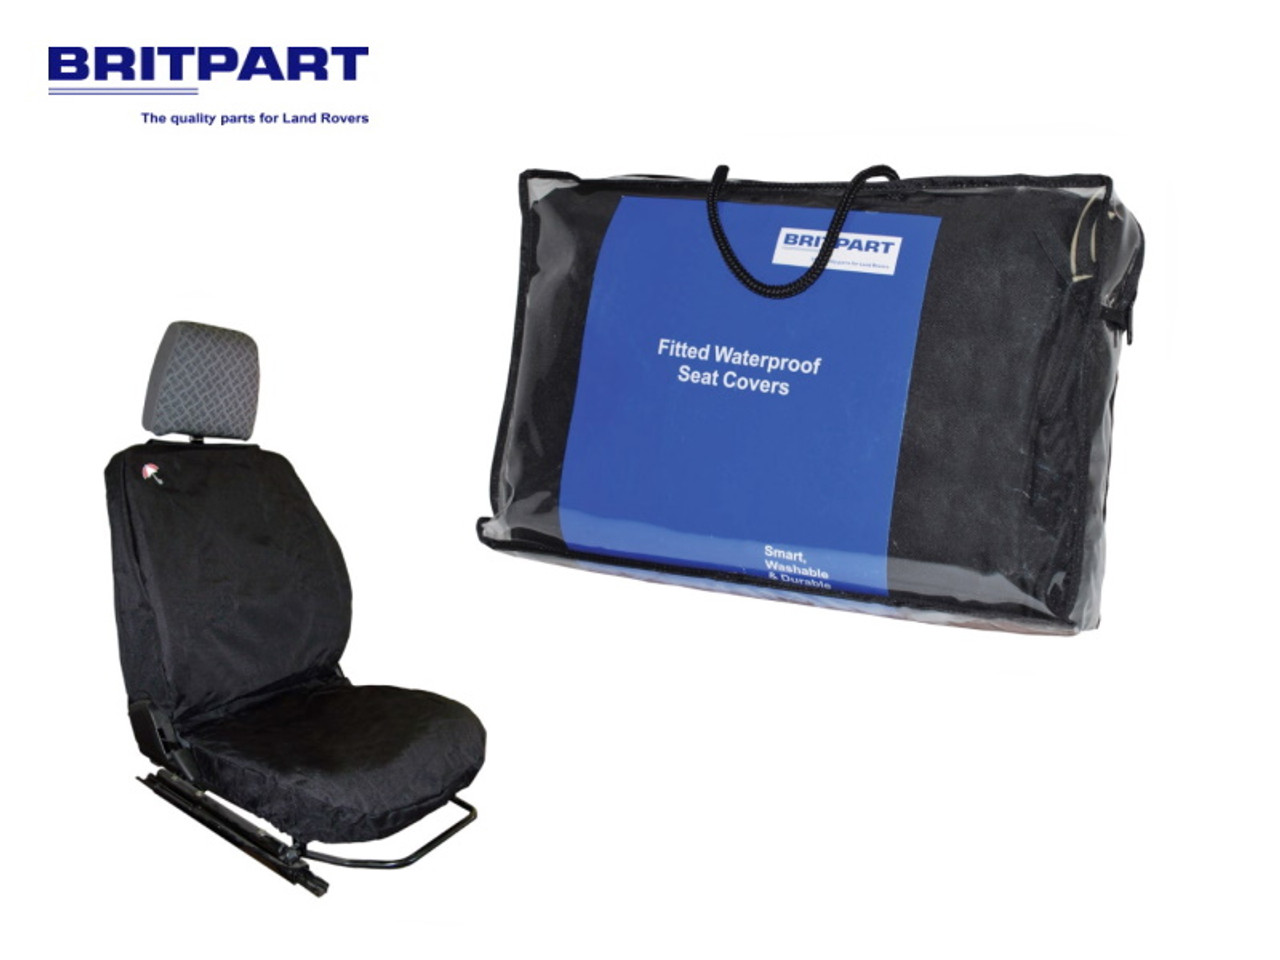 Britpart Waterproof Seat Cover Set For Defender Up To 2007 Front Seats In Black - DA2815BLACK